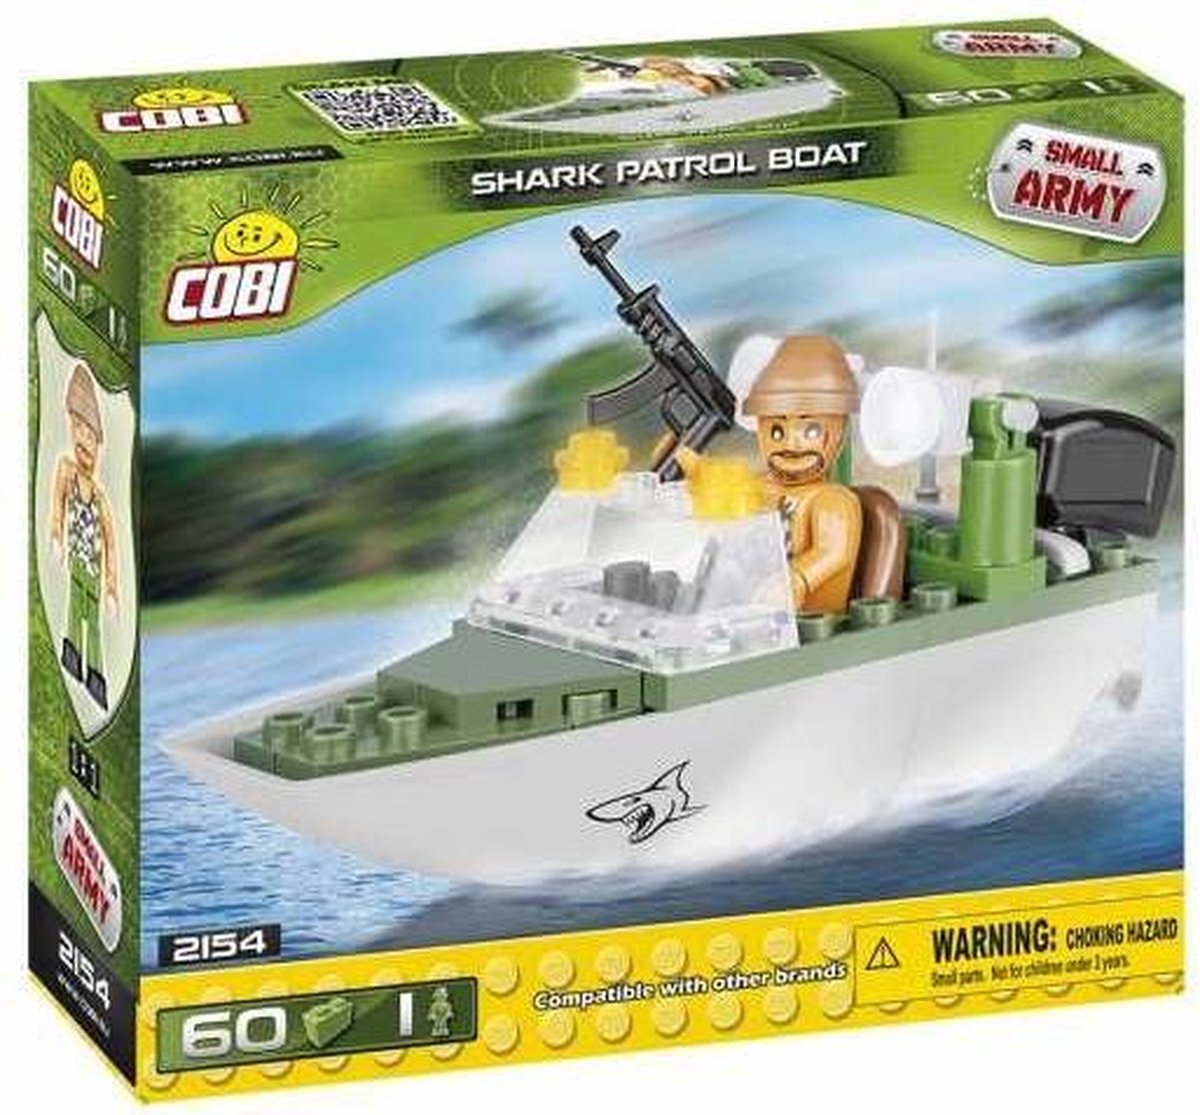 Small Army Shark Patrol Boat bouwset 60-delig 2154